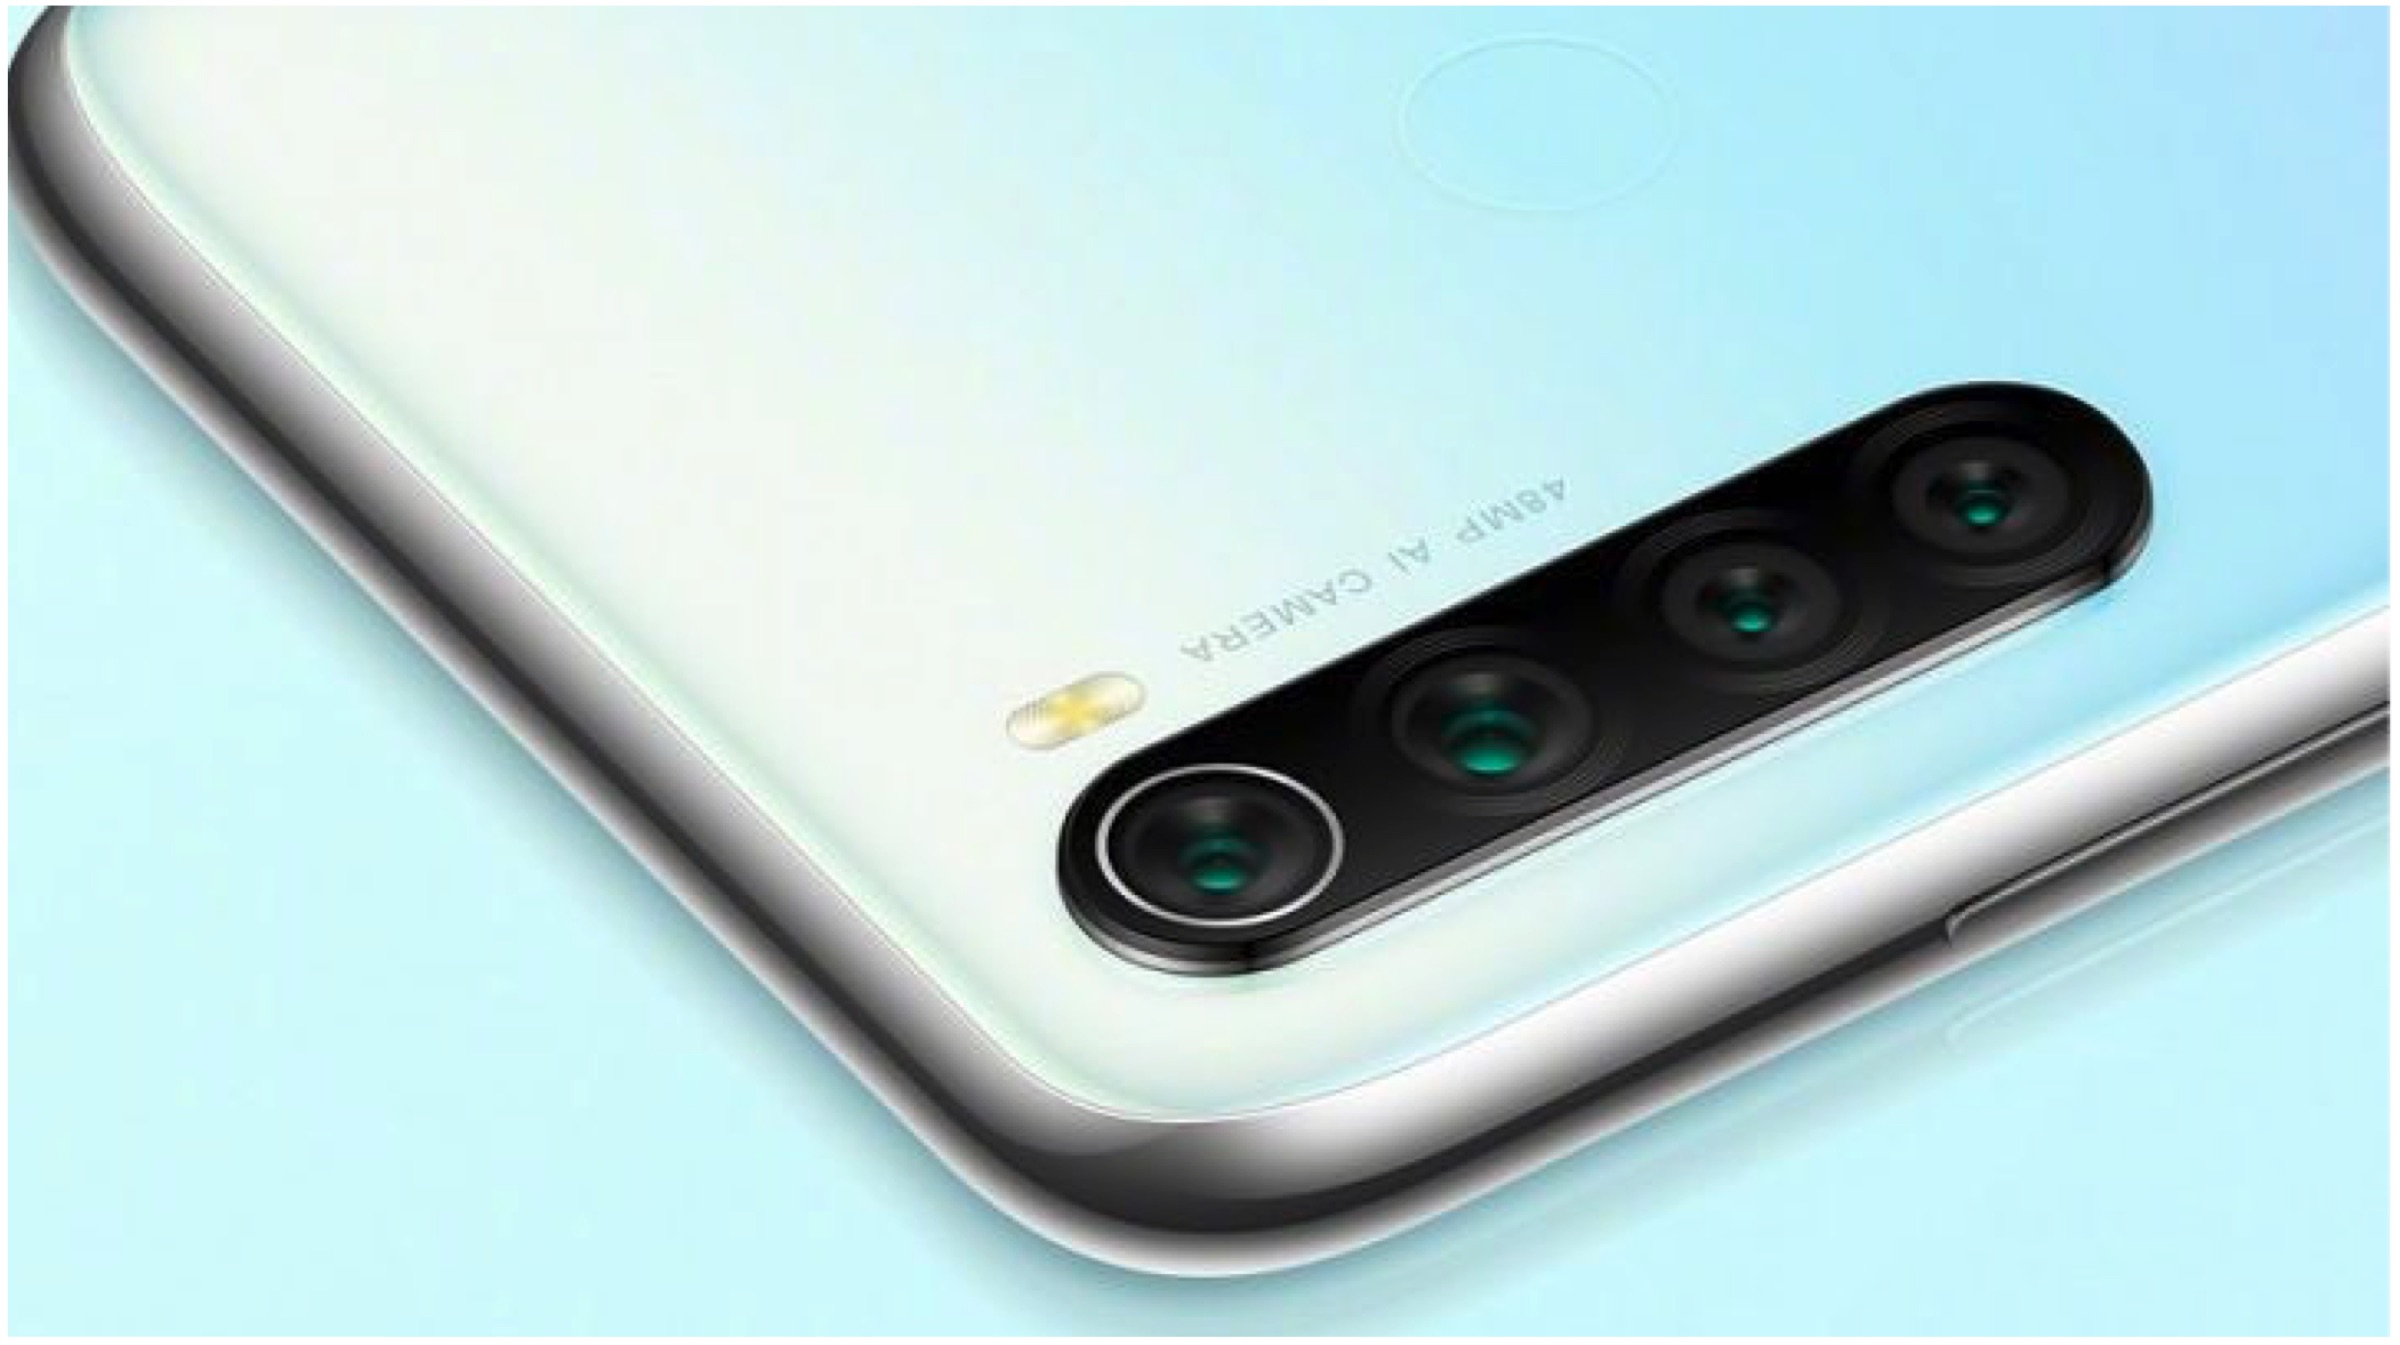 Xiaomi Mengonfirmasi The Redmi Note 8 Akan Memiliki Snapdragon 665, 48 MP Quad Cameras